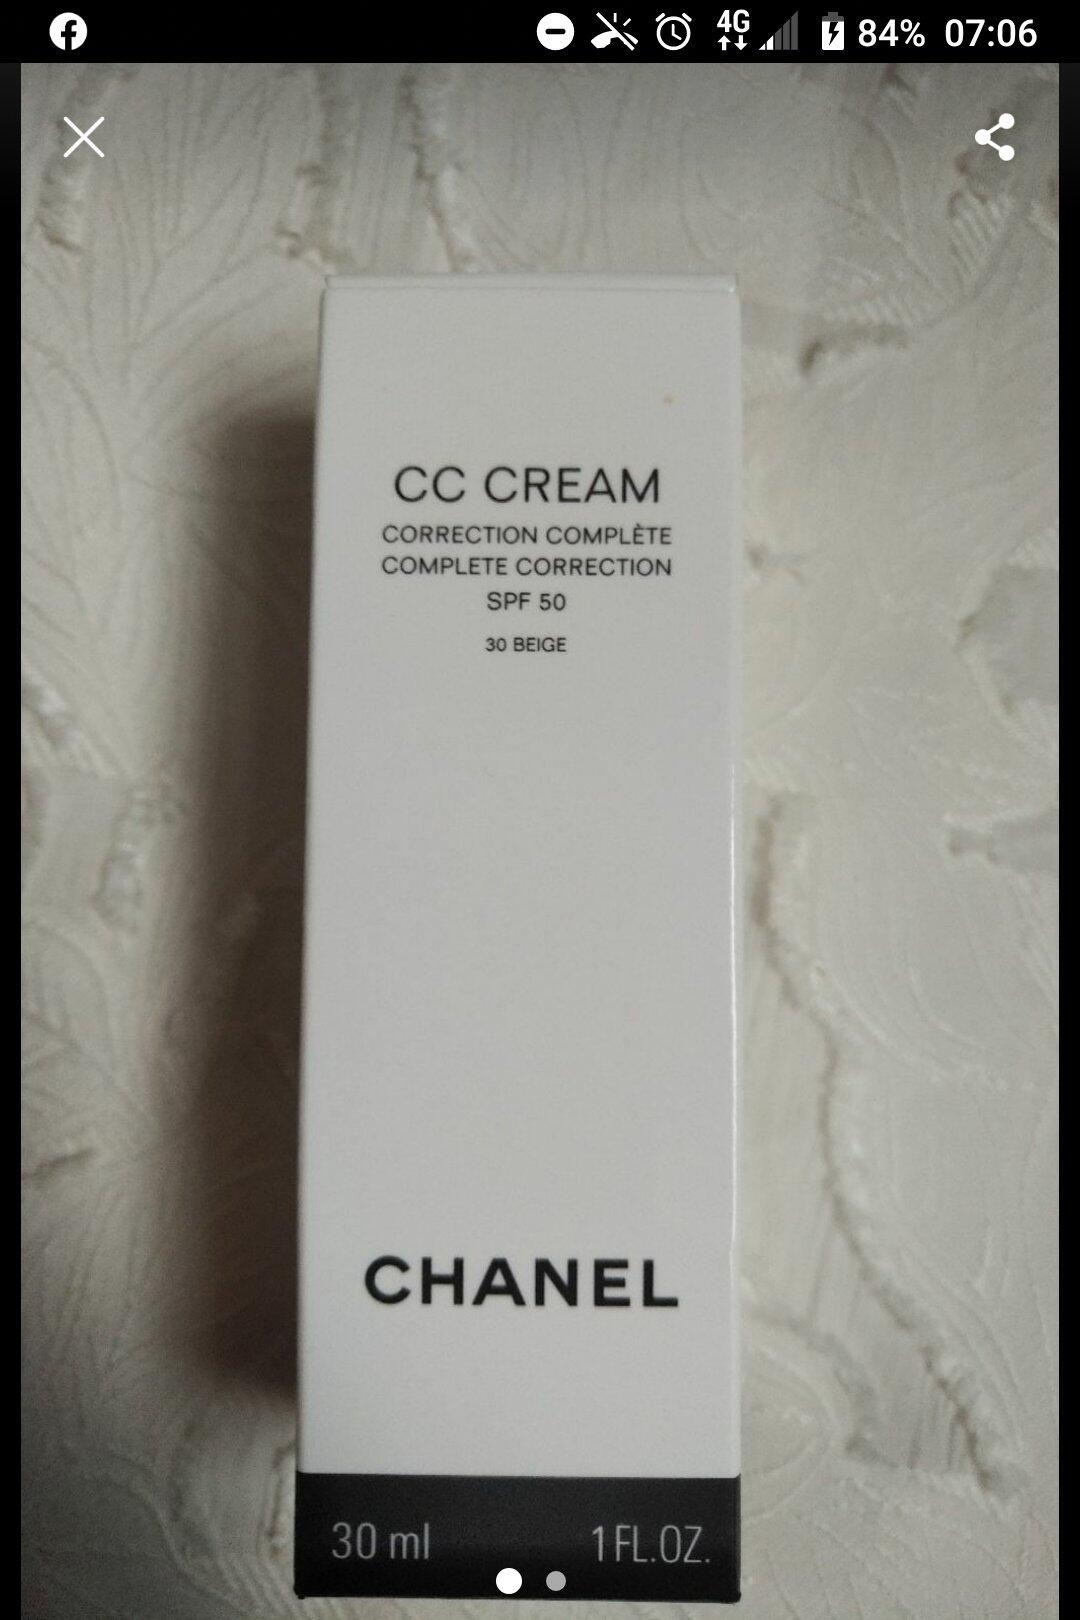  Chanel Cc Cream 30 Beige